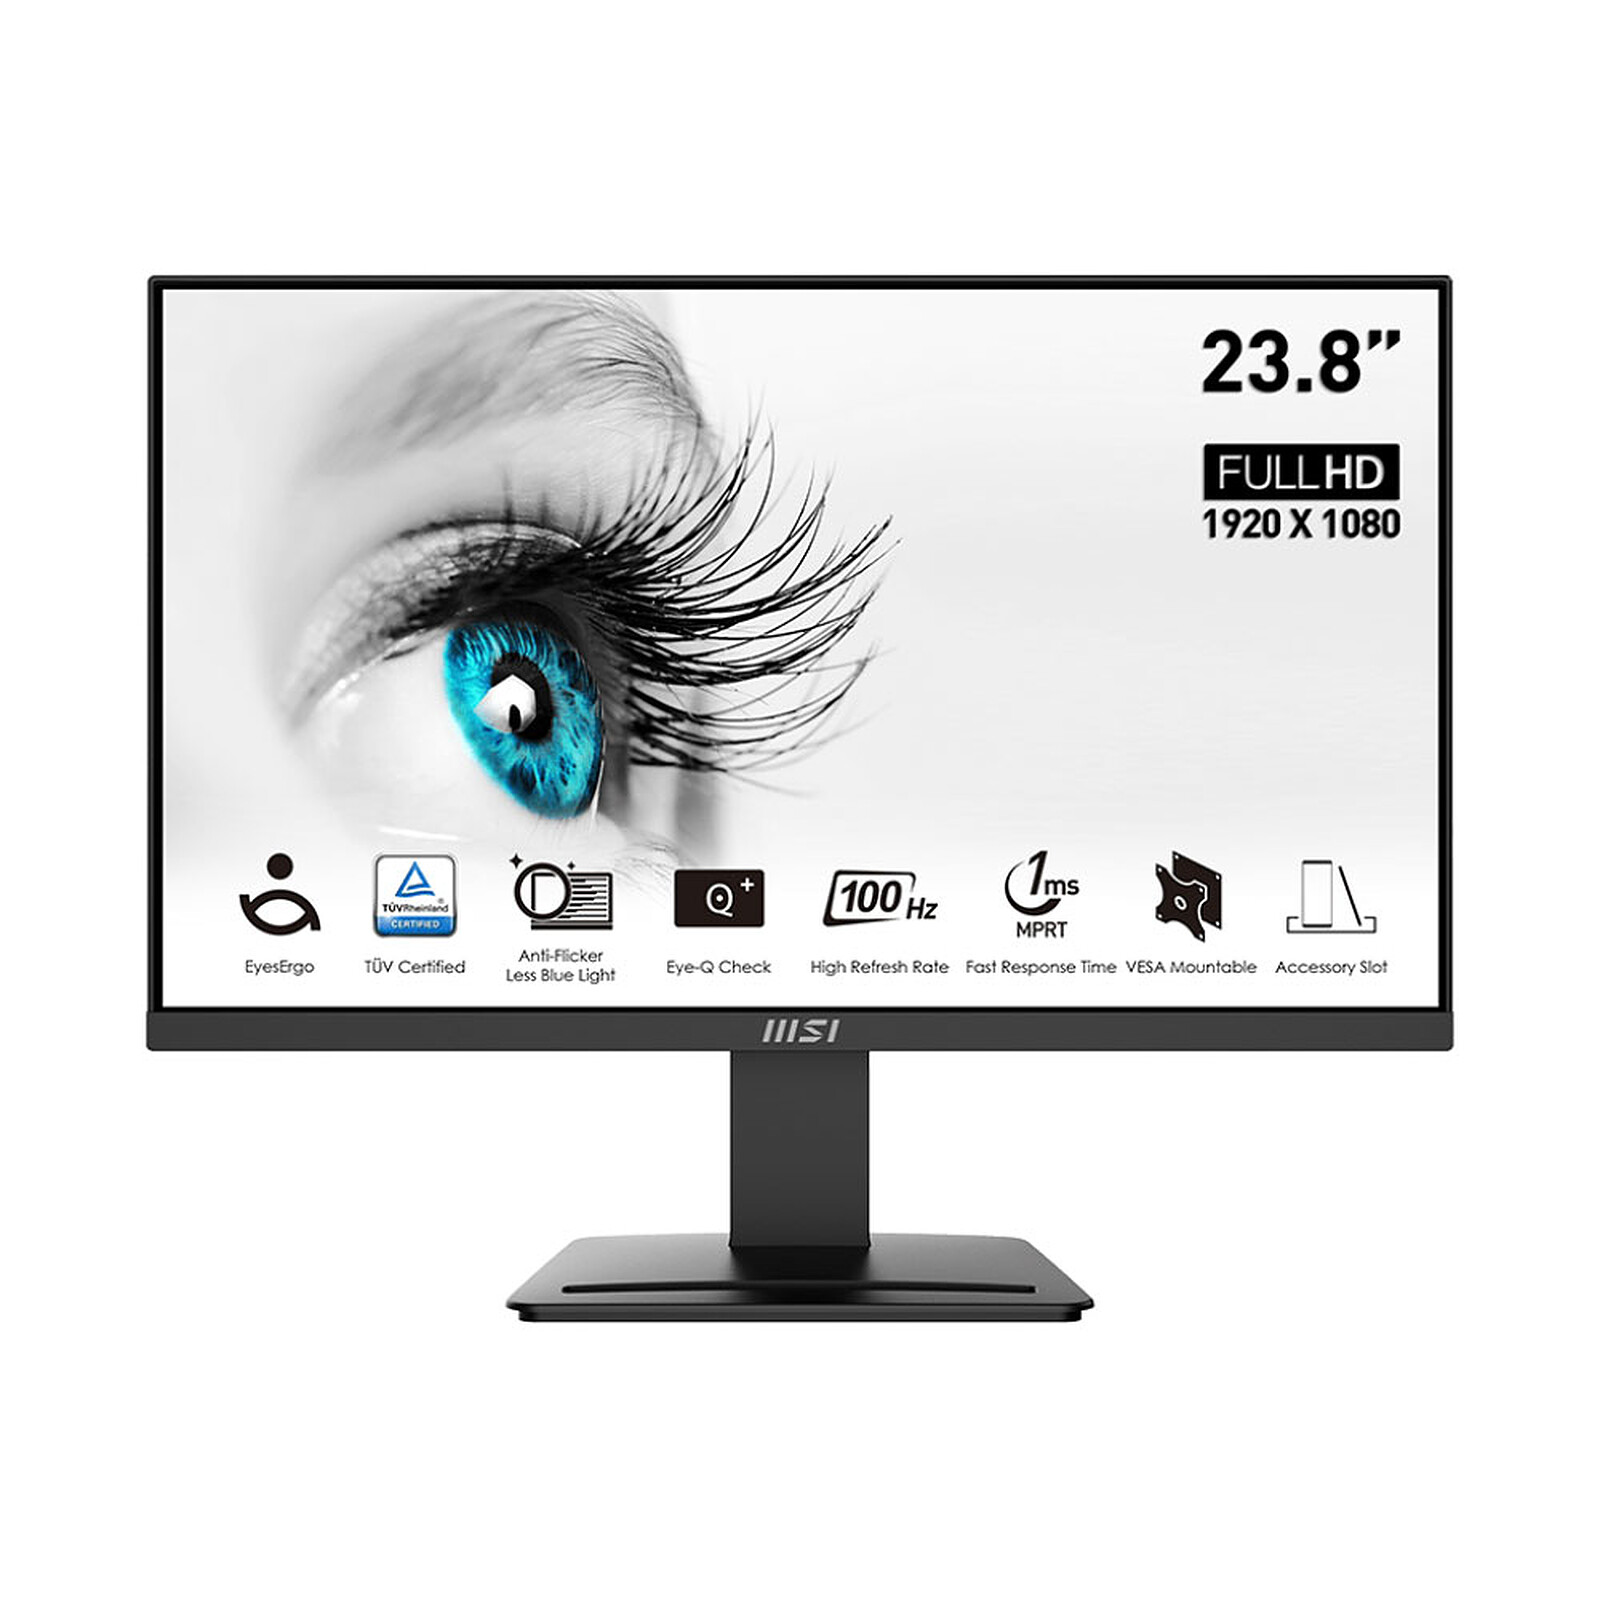 Millenium Display 27 PRO - Ecran PC - Garantie 3 ans LDLC